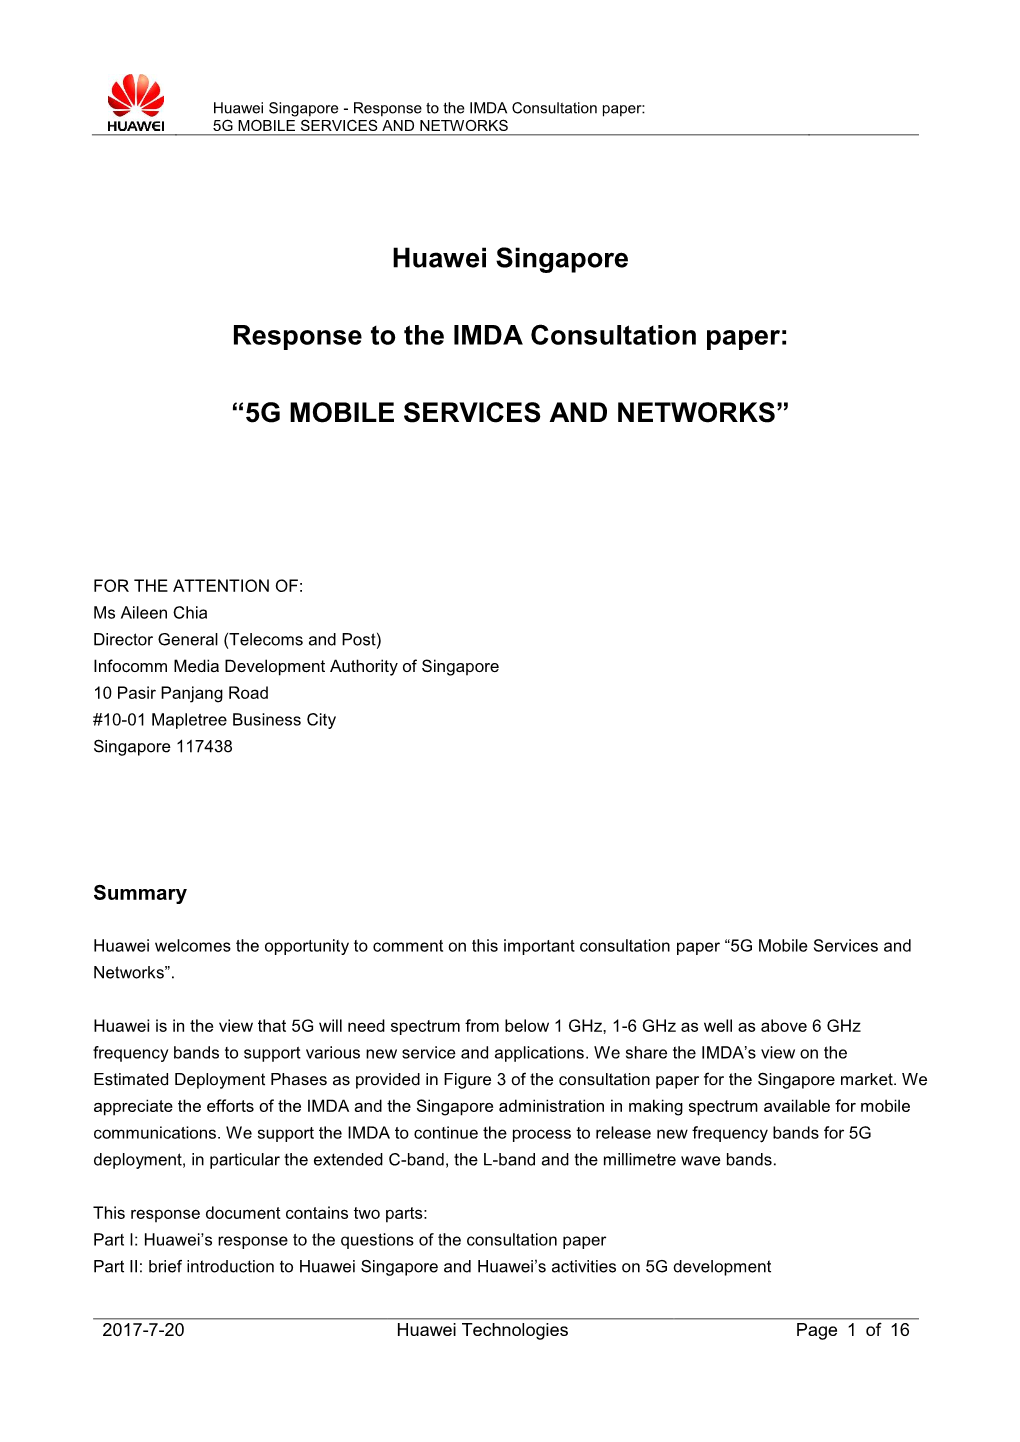 Huawei Singapore Response to the IMDA Consultation Paper: “5G